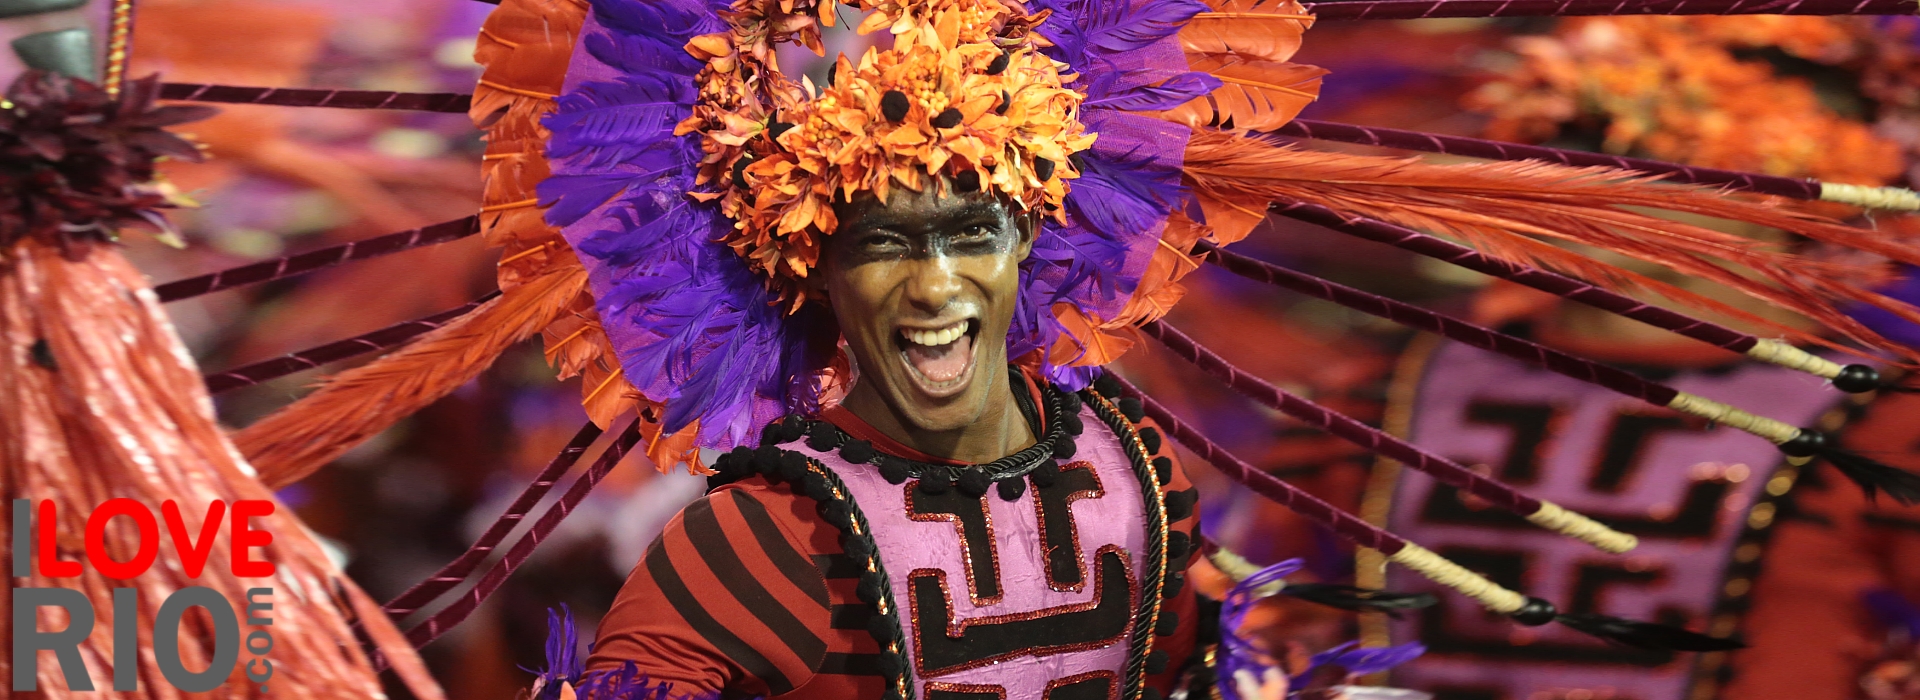 Человек-карнавал-танцор Рио де Жанейро